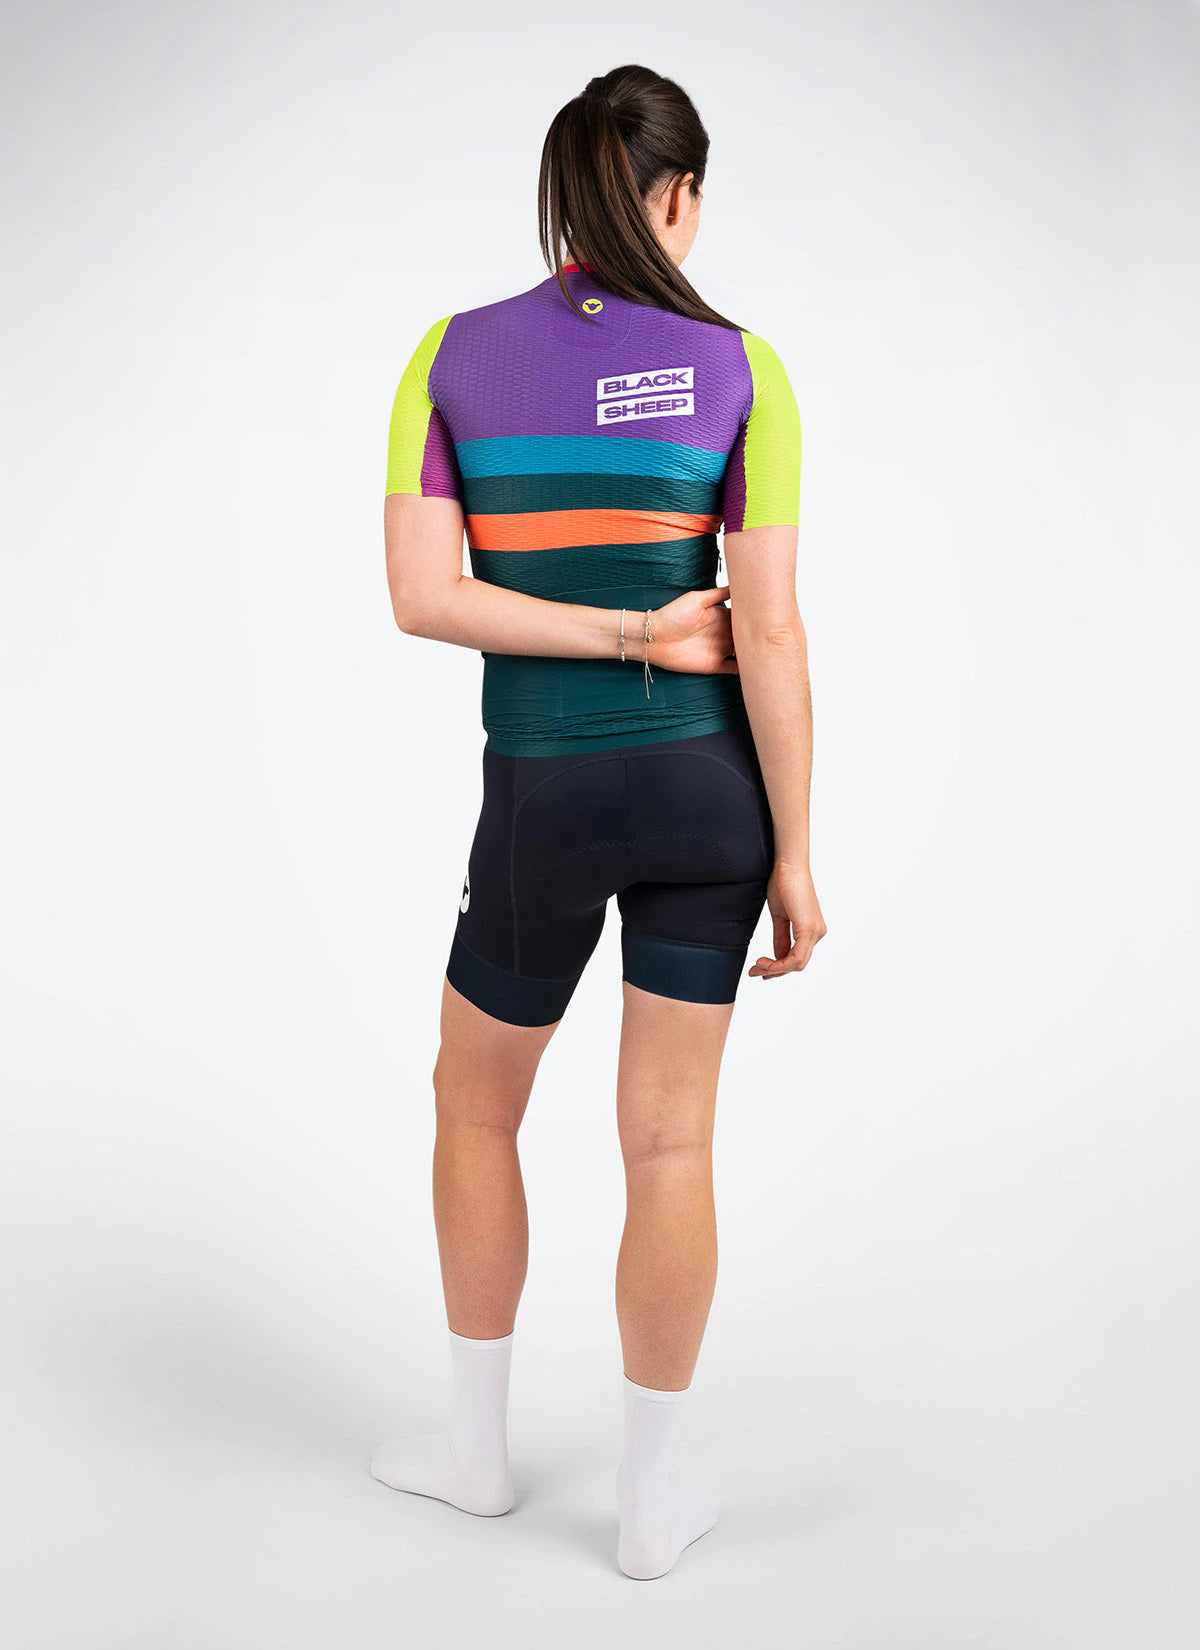 Black Sheep Cycling Women's WMN LuxLite Jersey - Classics Flanders | CYCLISM